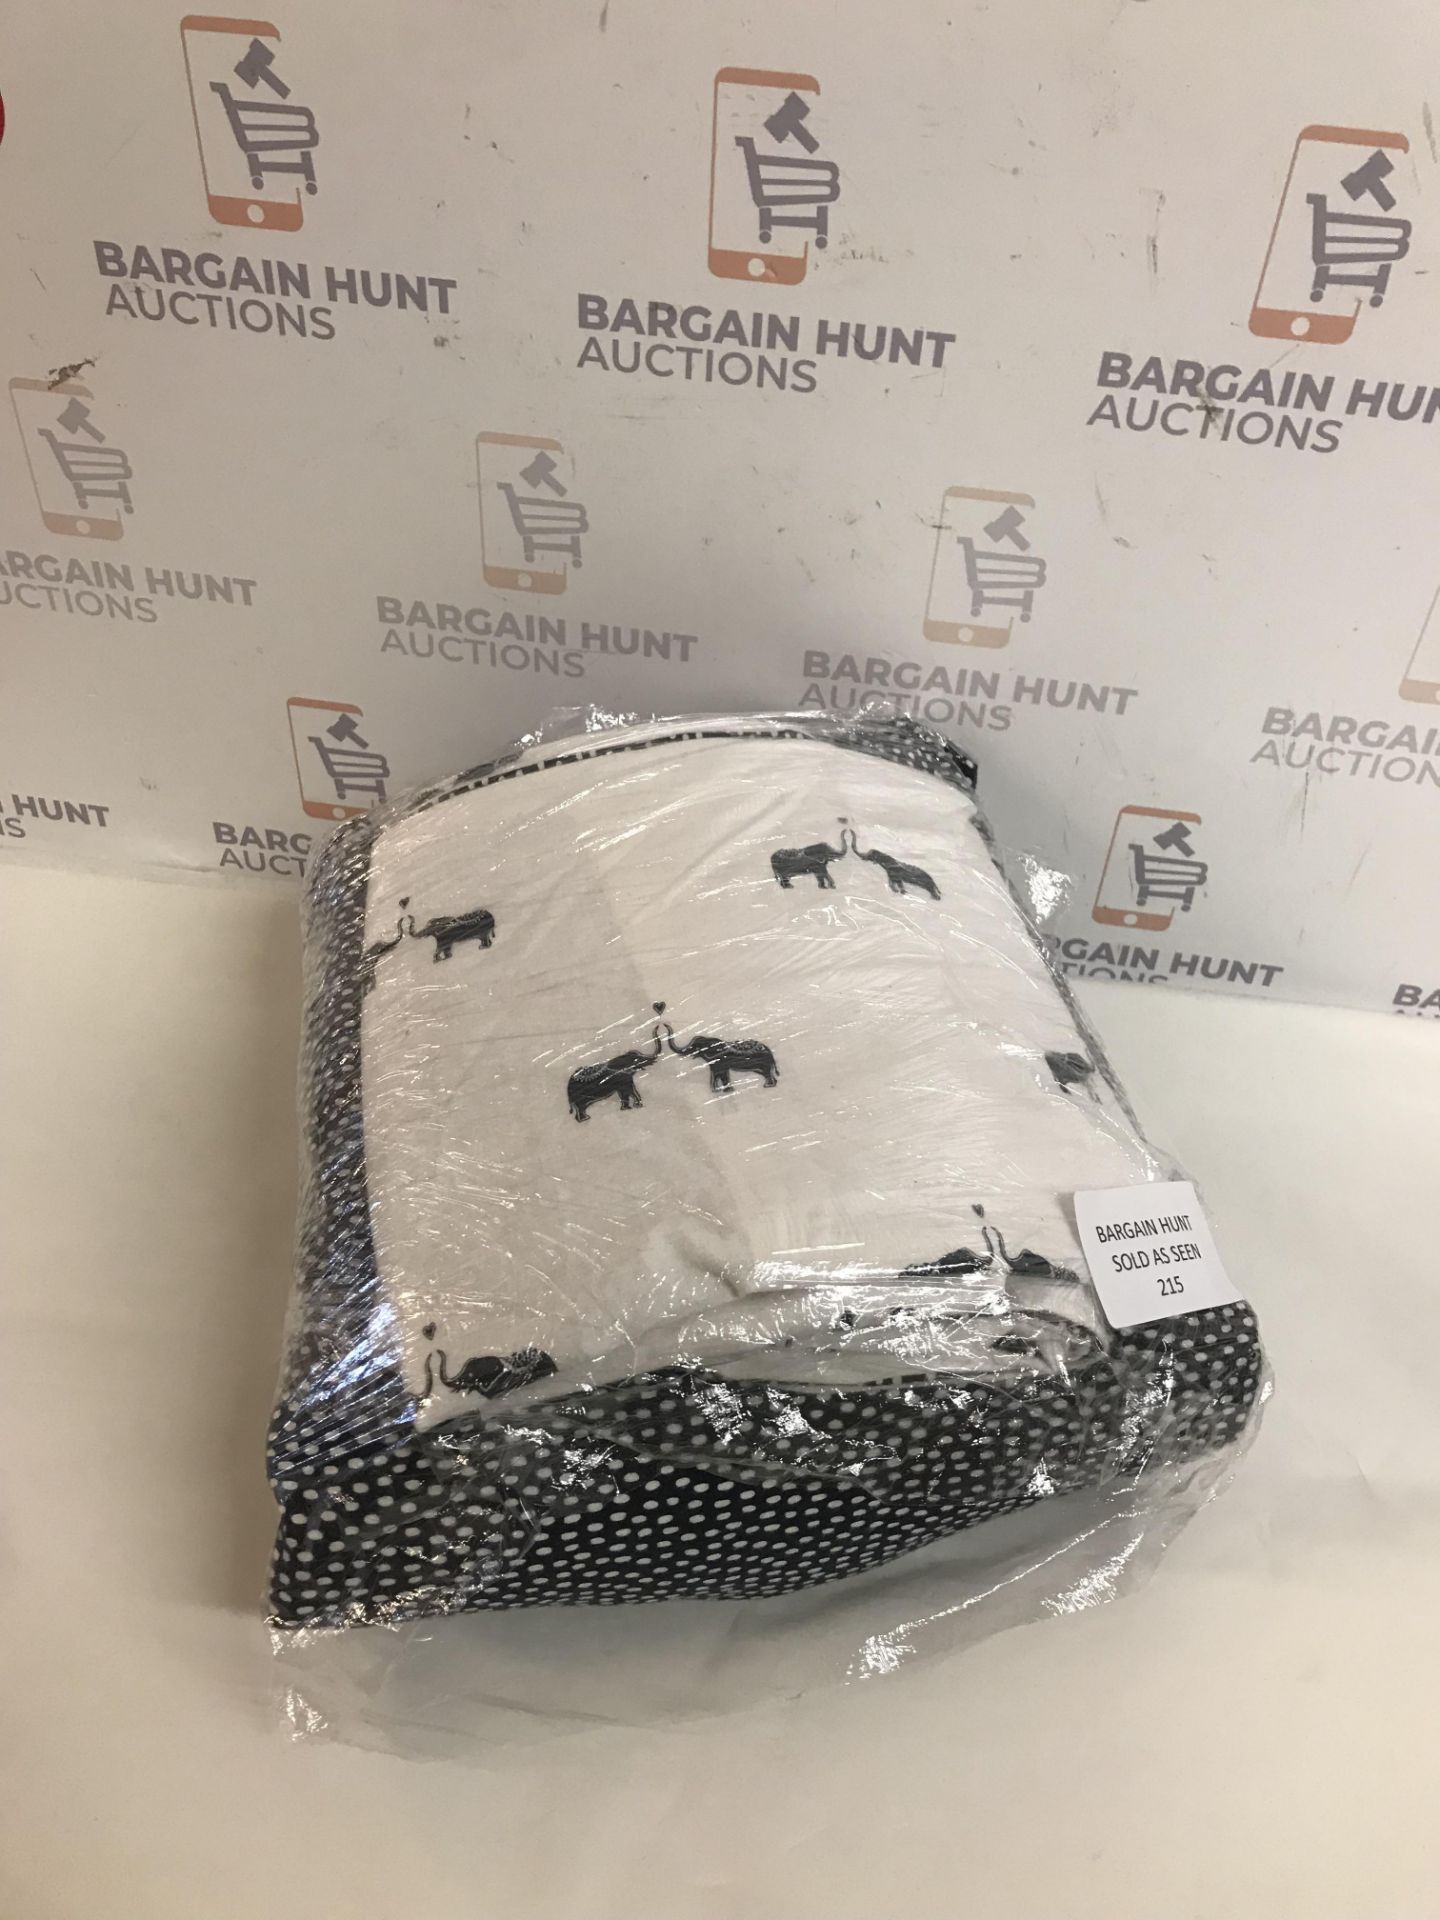 Elephant Print Brushed Cotton Bedding Set, King Size RRP £59 - Image 2 of 2